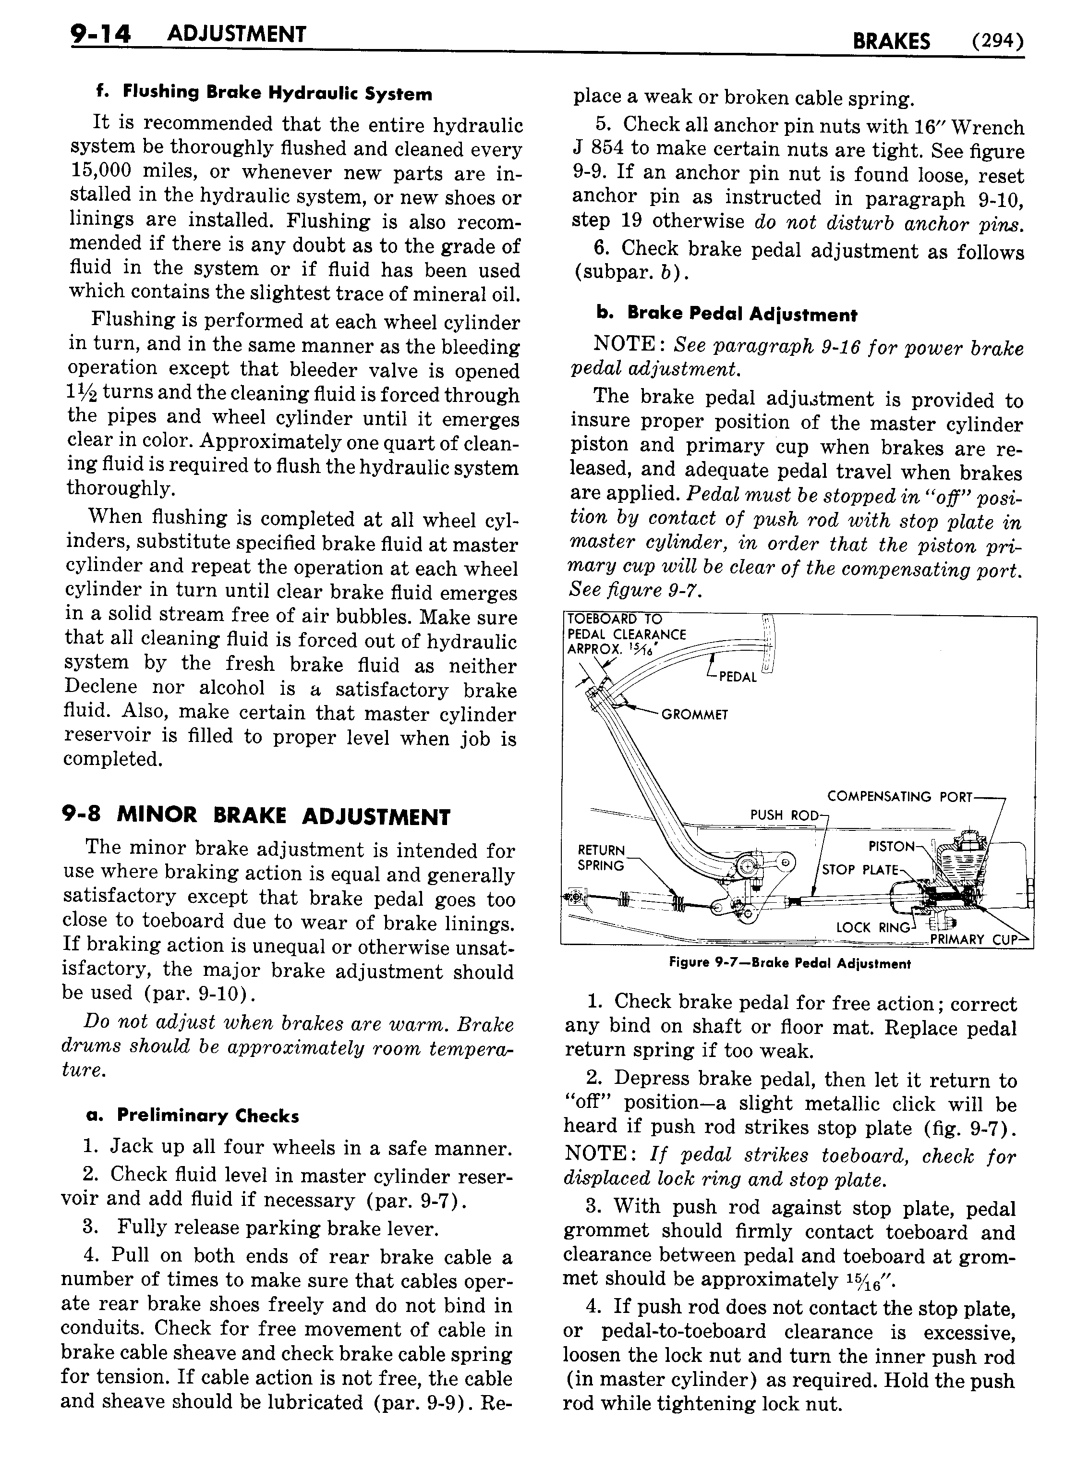 n_10 1954 Buick Shop Manual - Brakes-014-014.jpg